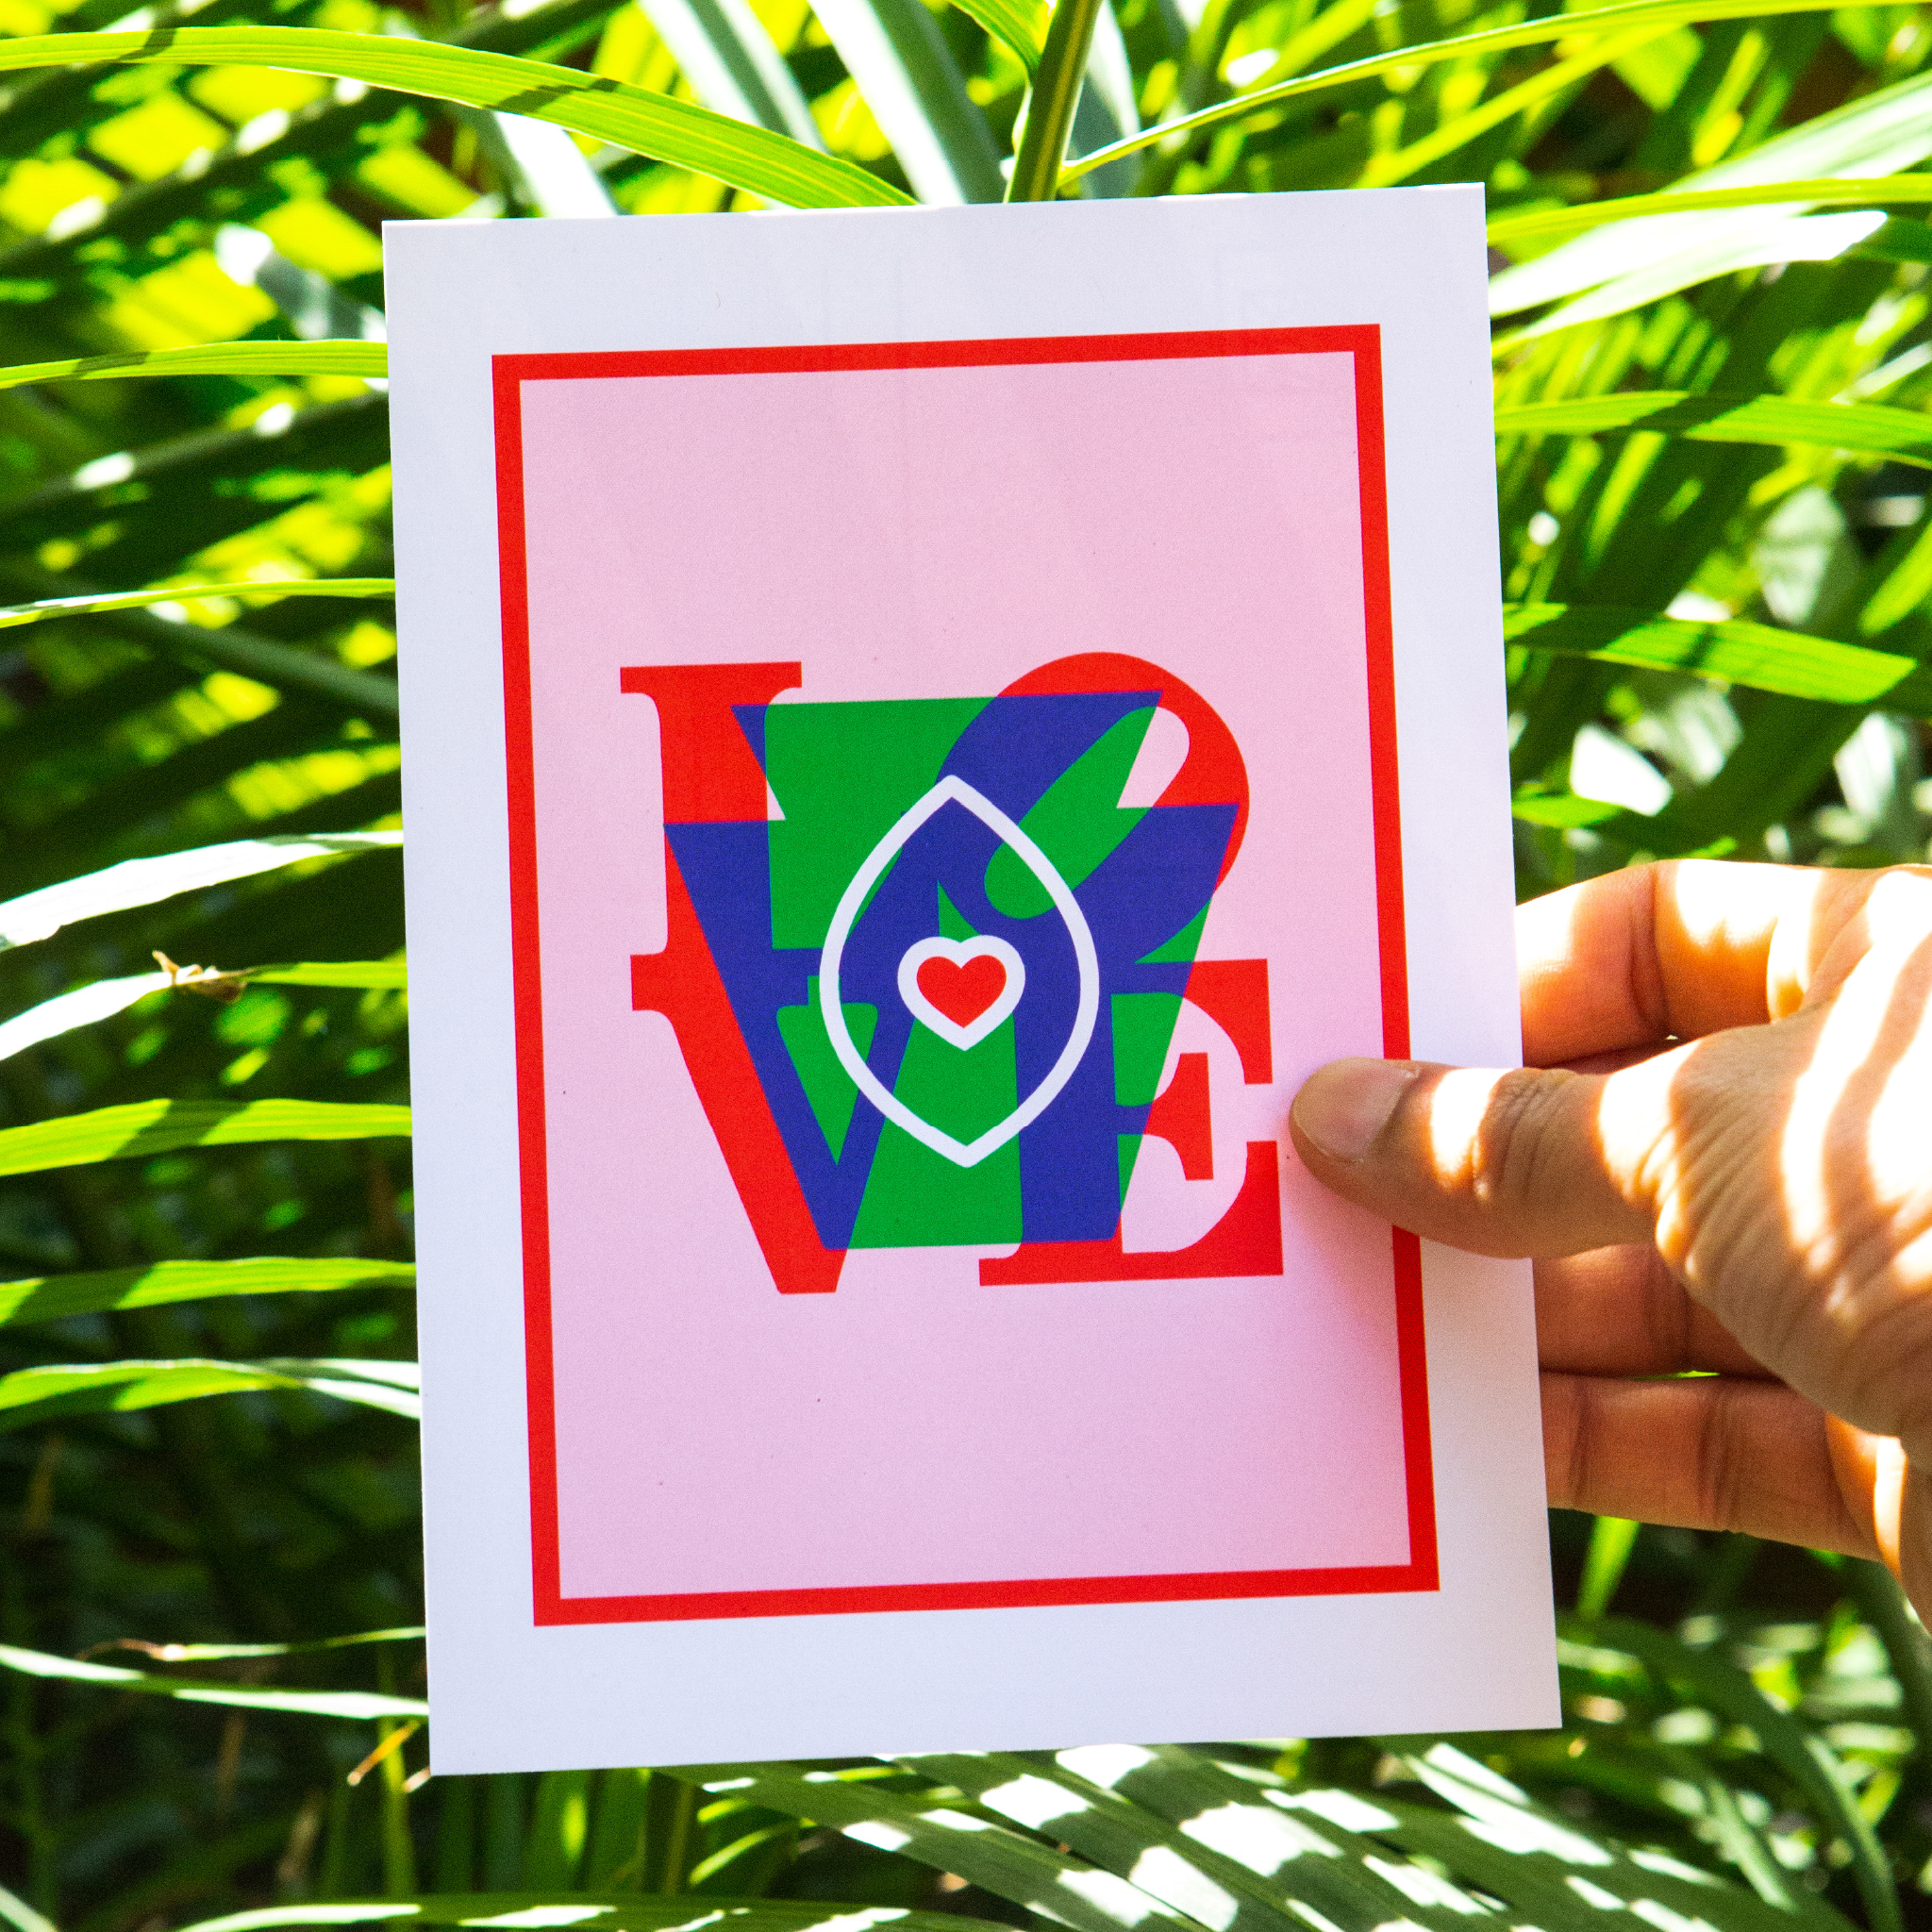 Indiana vulva love postcard art - Shop Saint Manifest